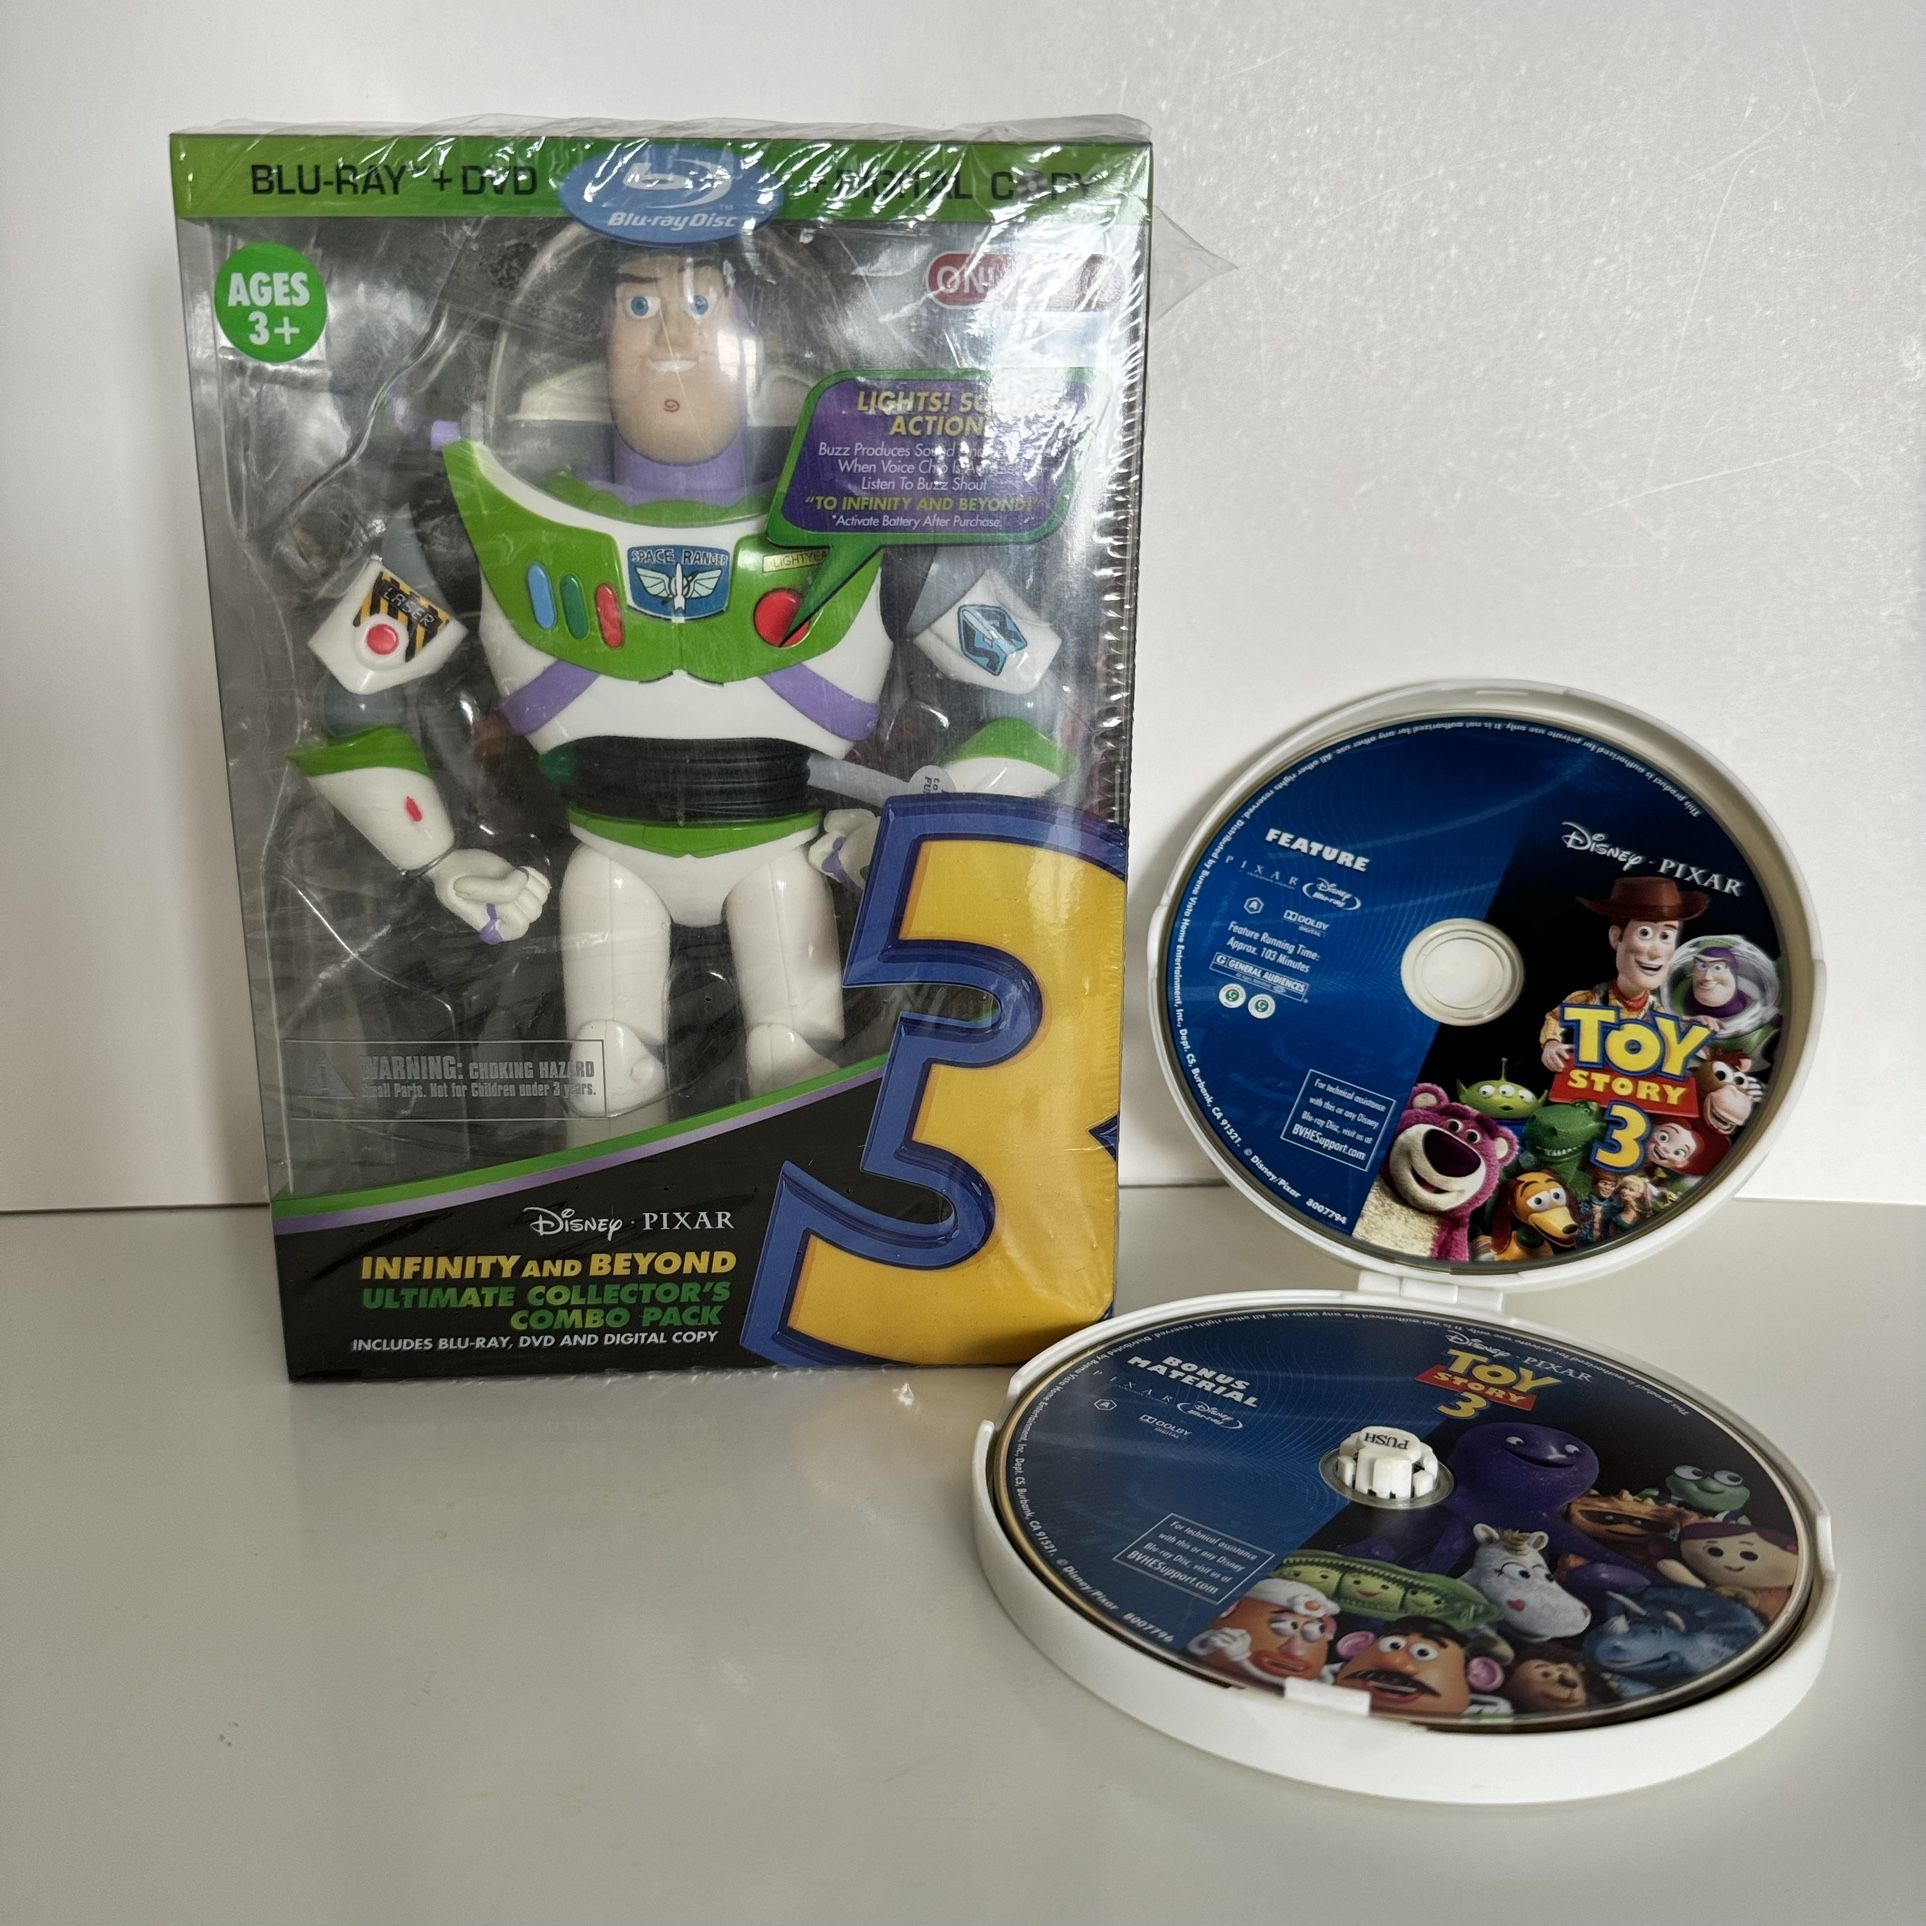 Toy Story 3 (Blu-ray+DVD+Digital Copy) Only At Target w/Buzz Lightyear